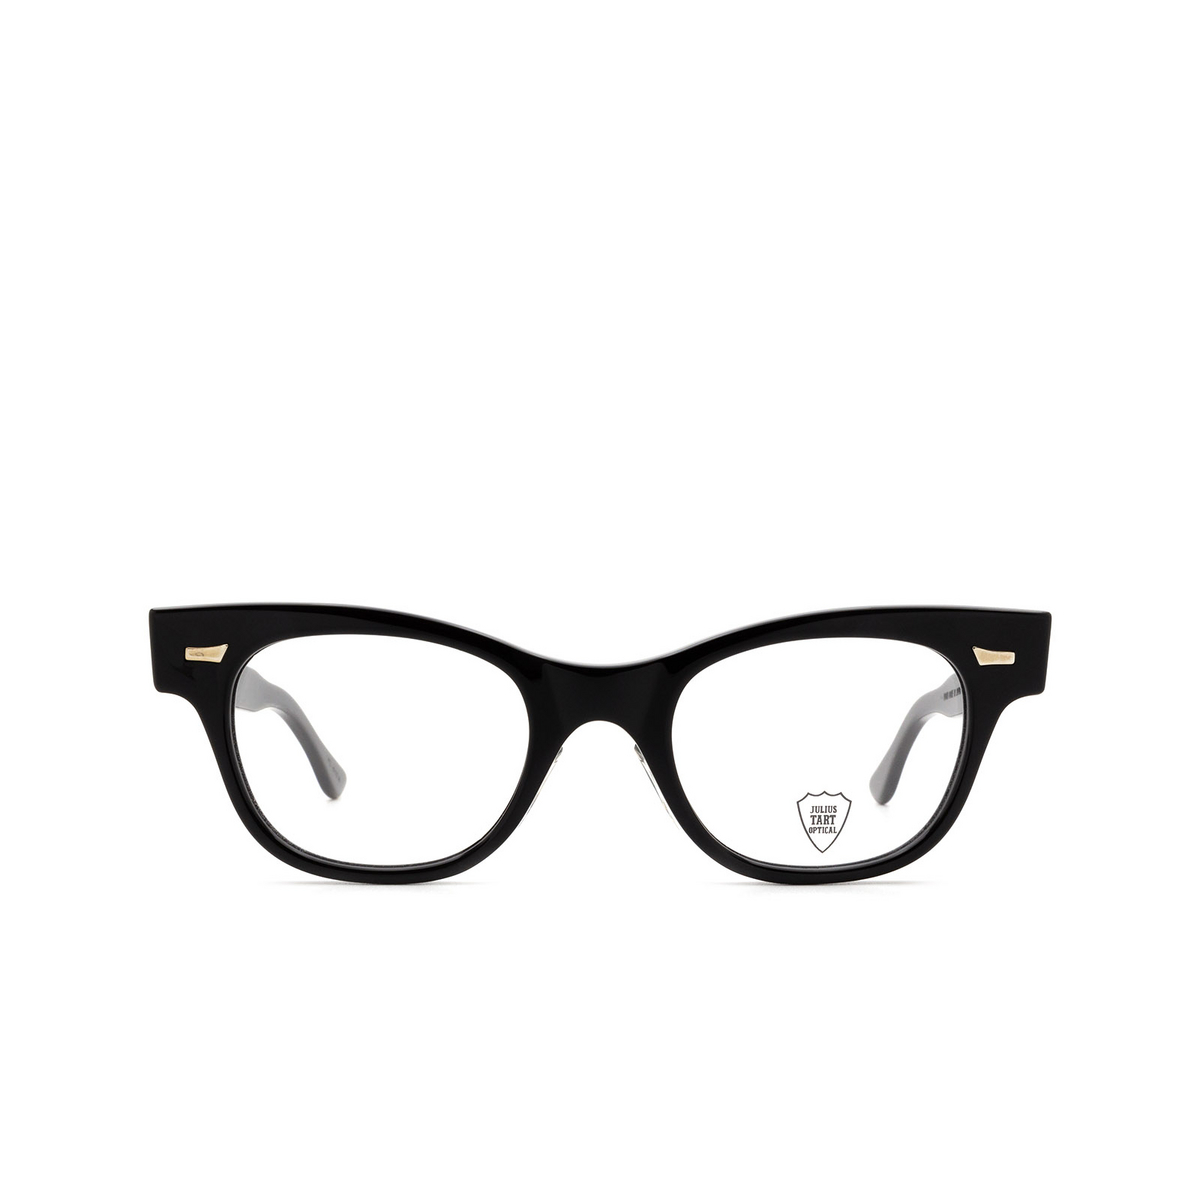 Julius Tart COUNTDOWN Eyeglasses BLACK - front view